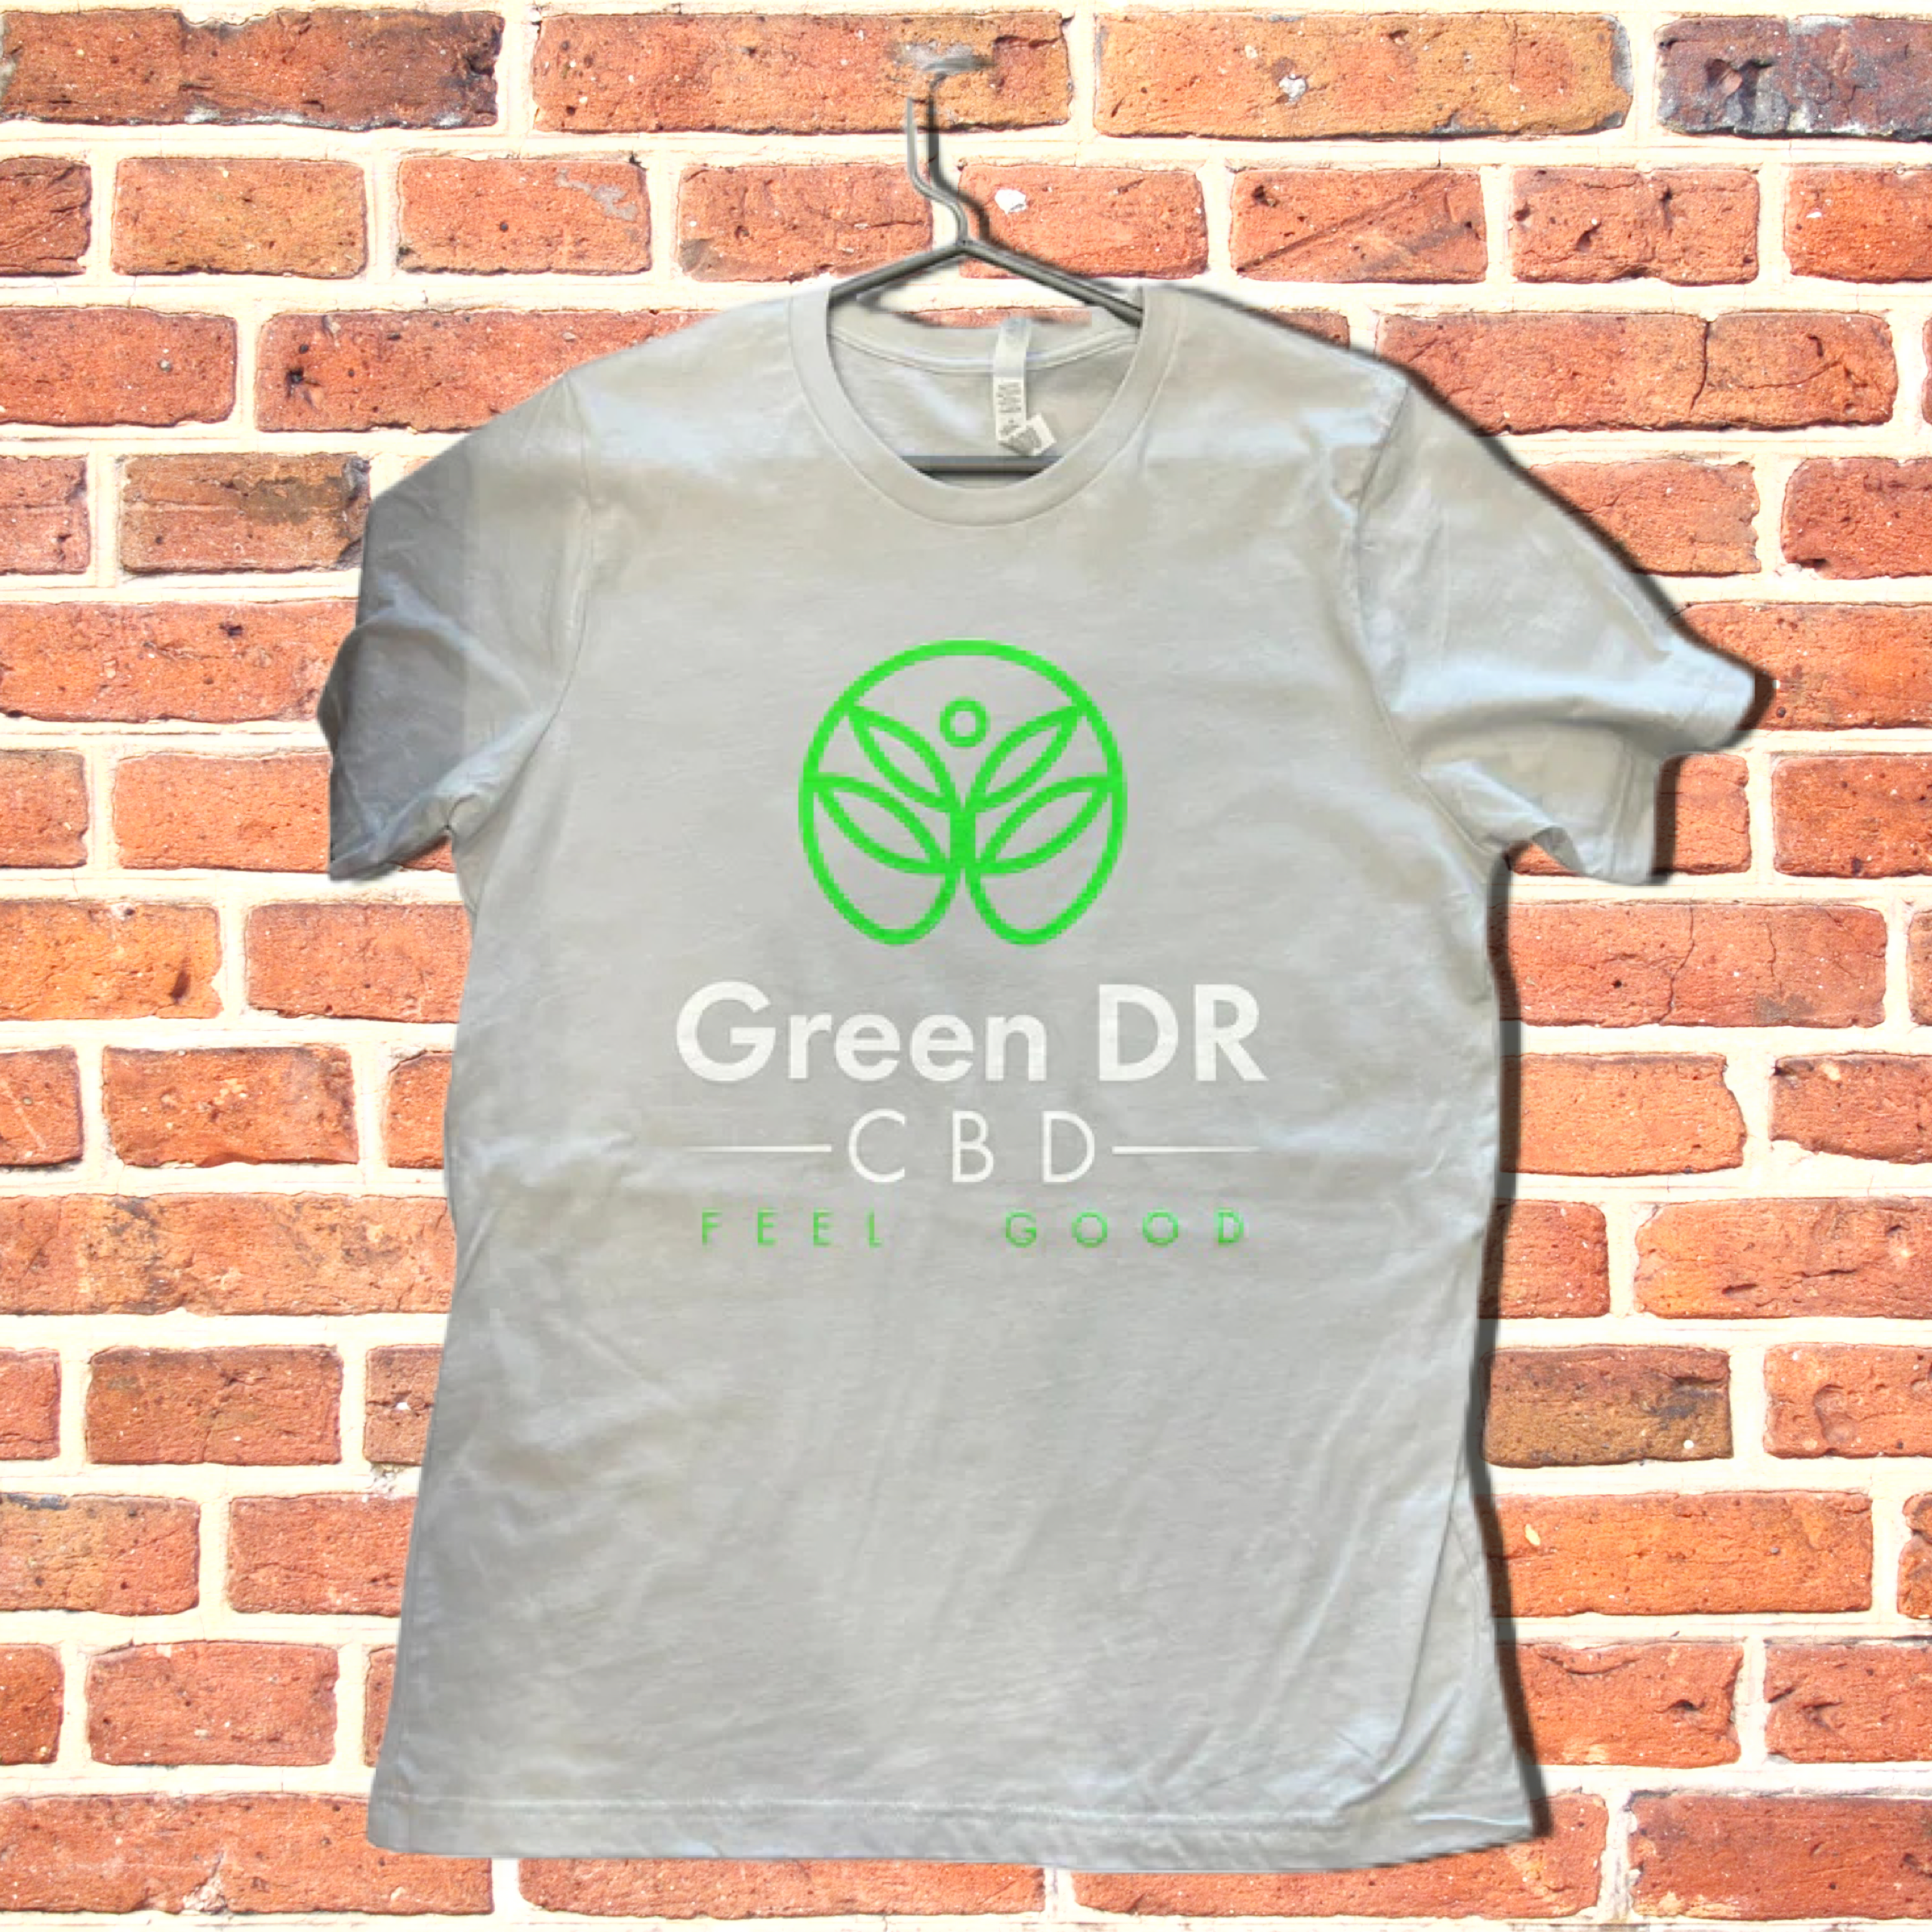 Solid Light Grey Green Dr. CBD T-Shirt - The Original Green DR CBD